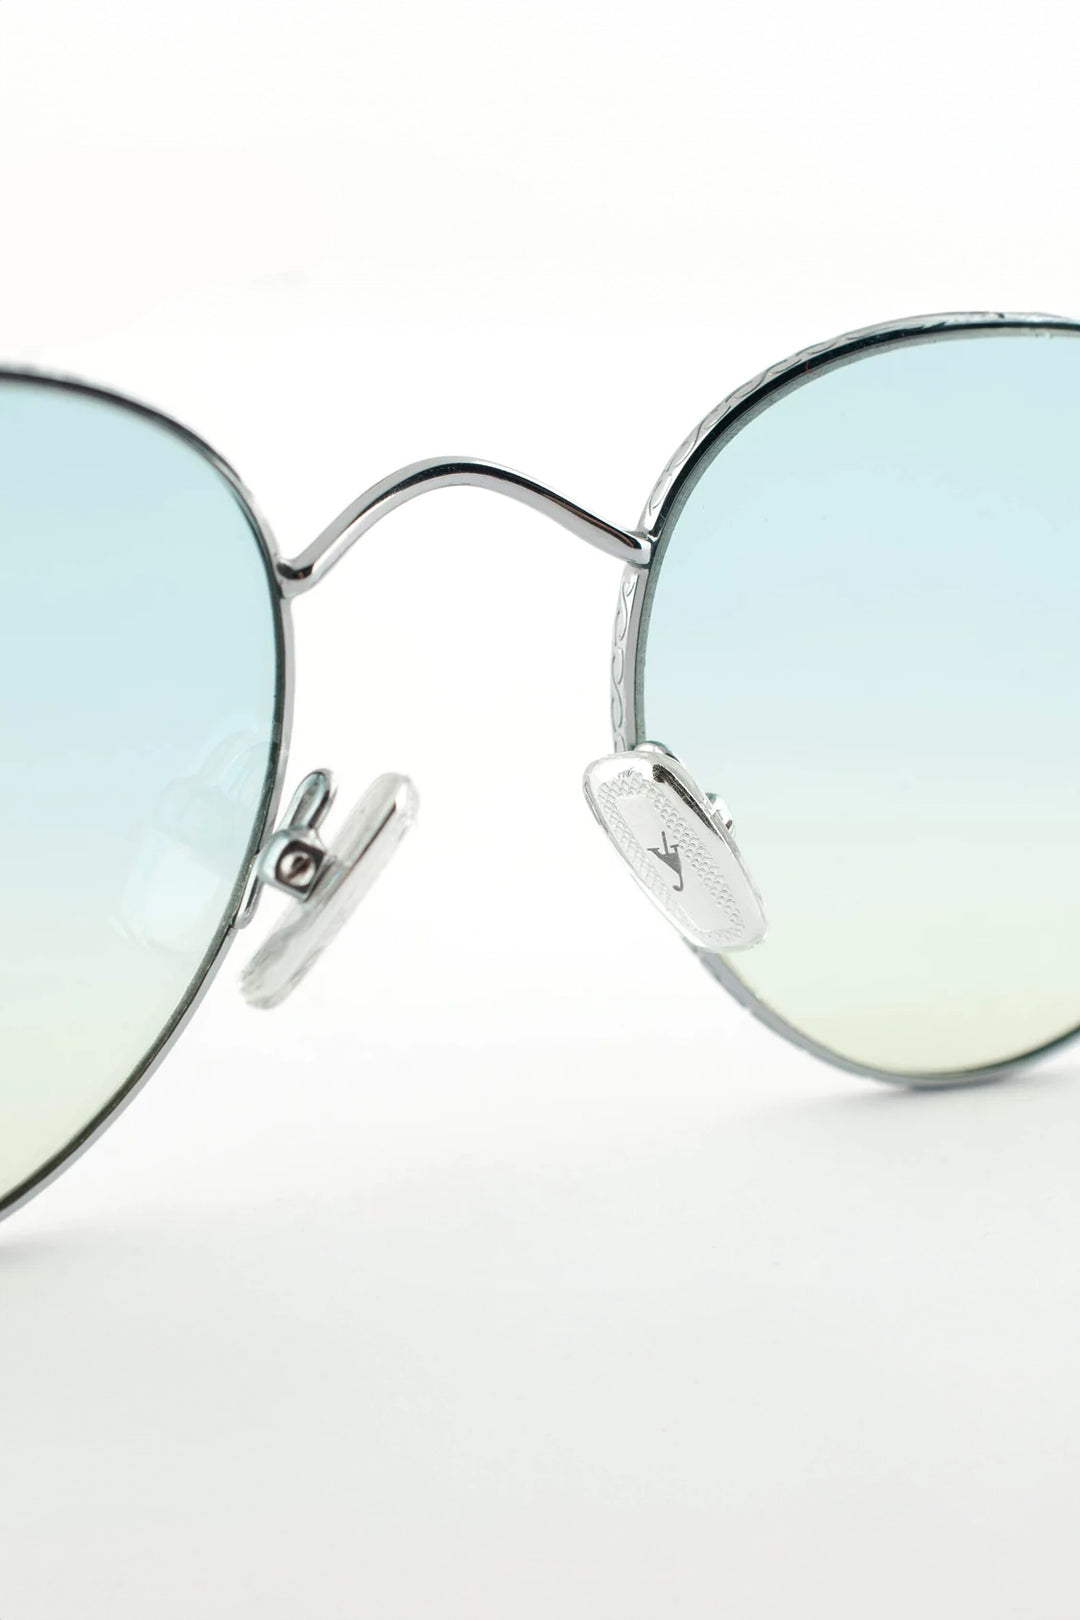 Jockey Sunglasses - Silver / Light Blue Gradient